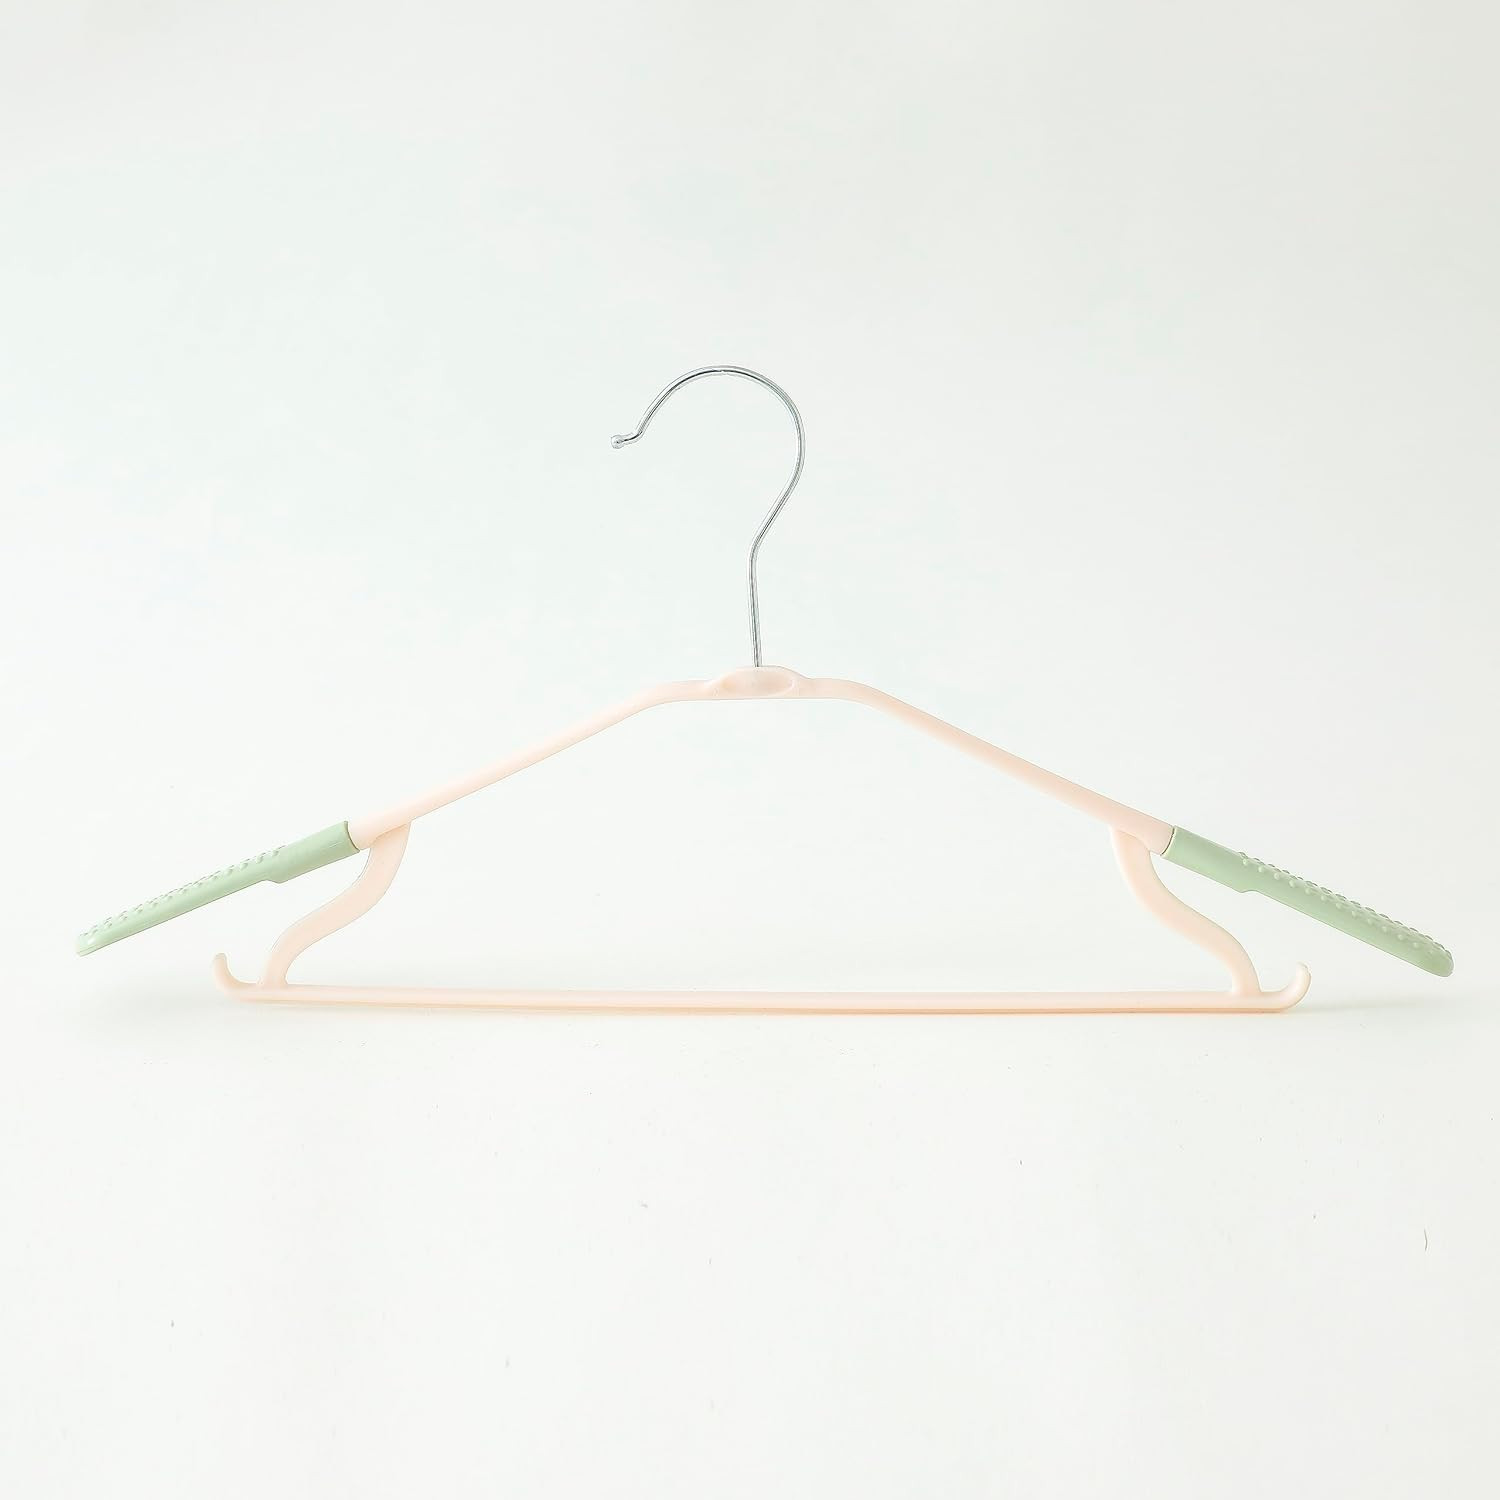 Kuber IndustriesPP Cloth Hanger Set of 5 With Zinc Plated Steel Hook (Green)